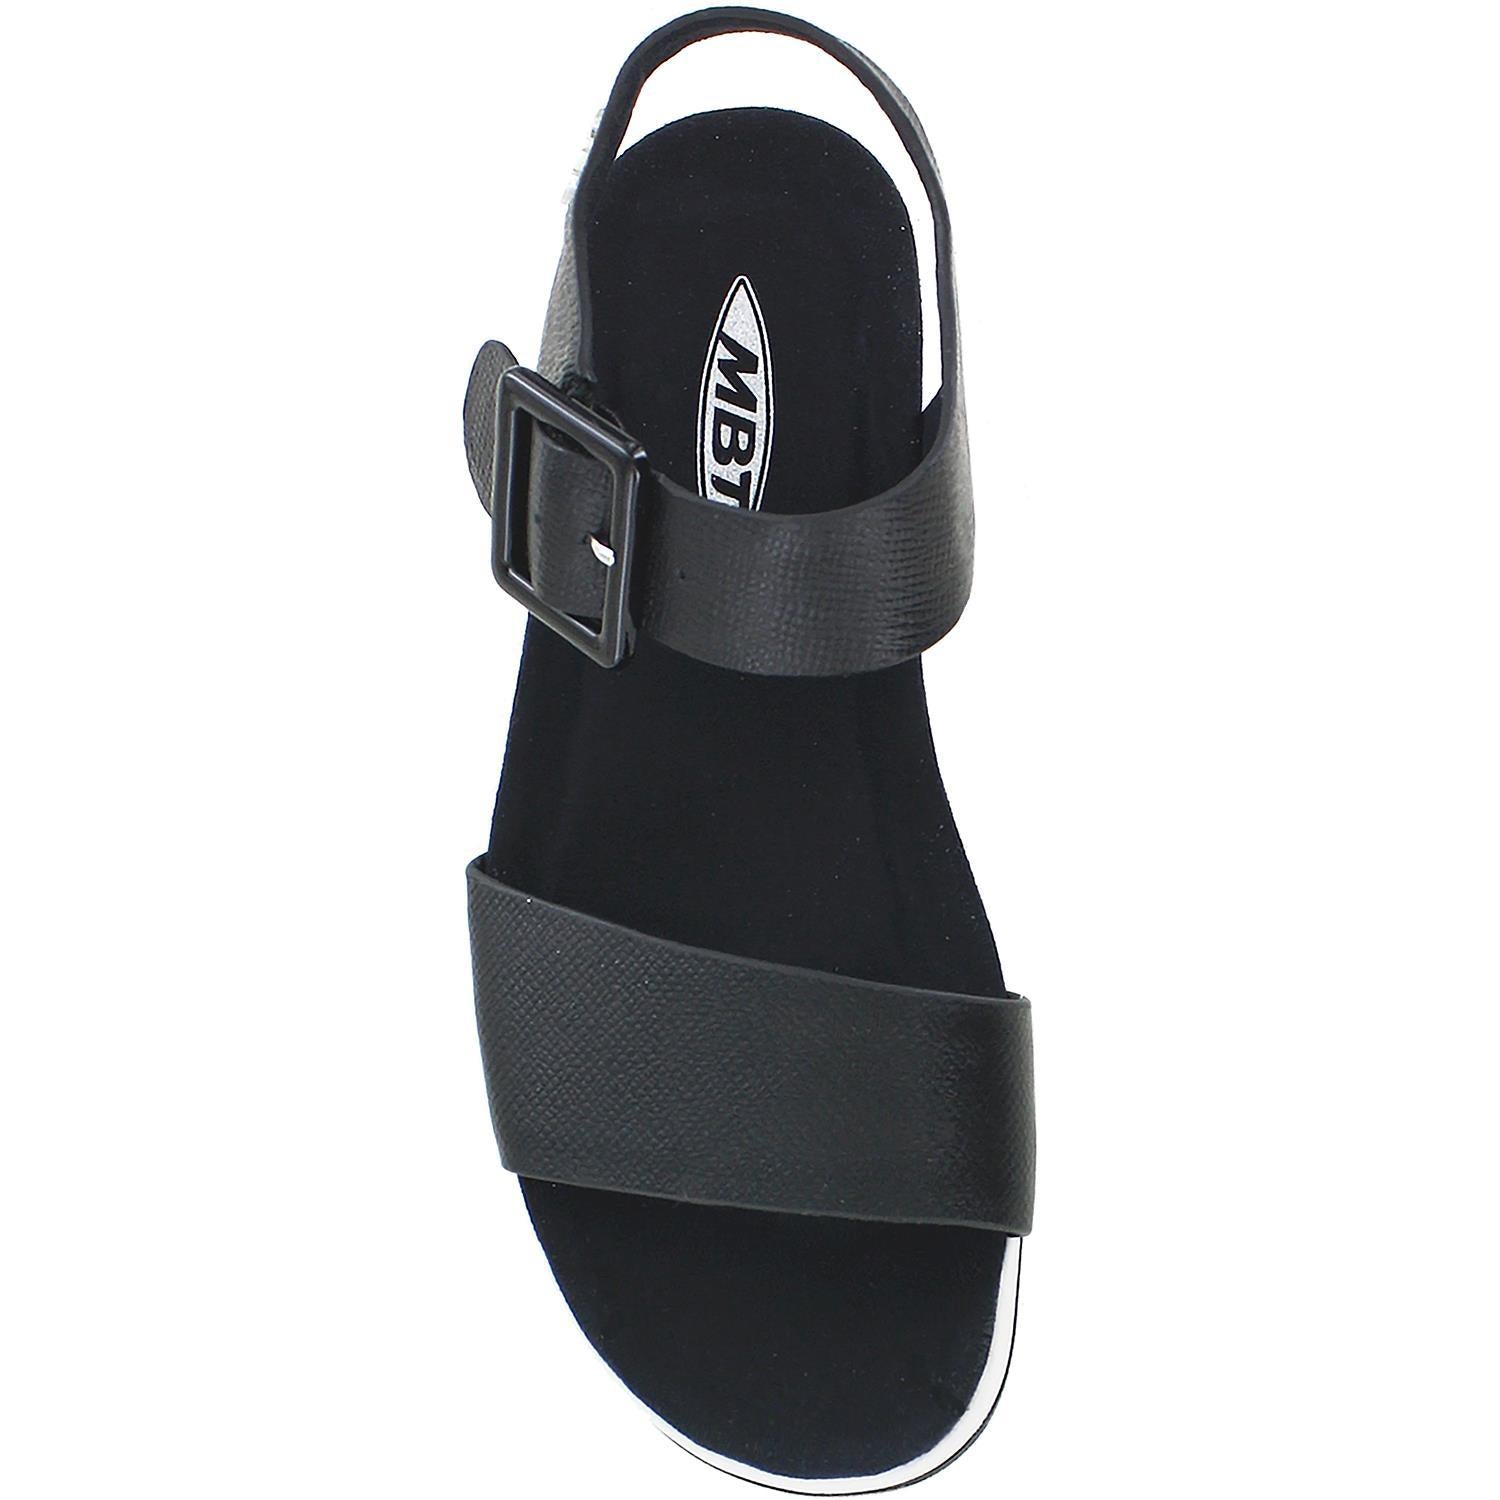 MBT Manni 2 Sandals | Women's Rocker Bottom Sandals | Footwear